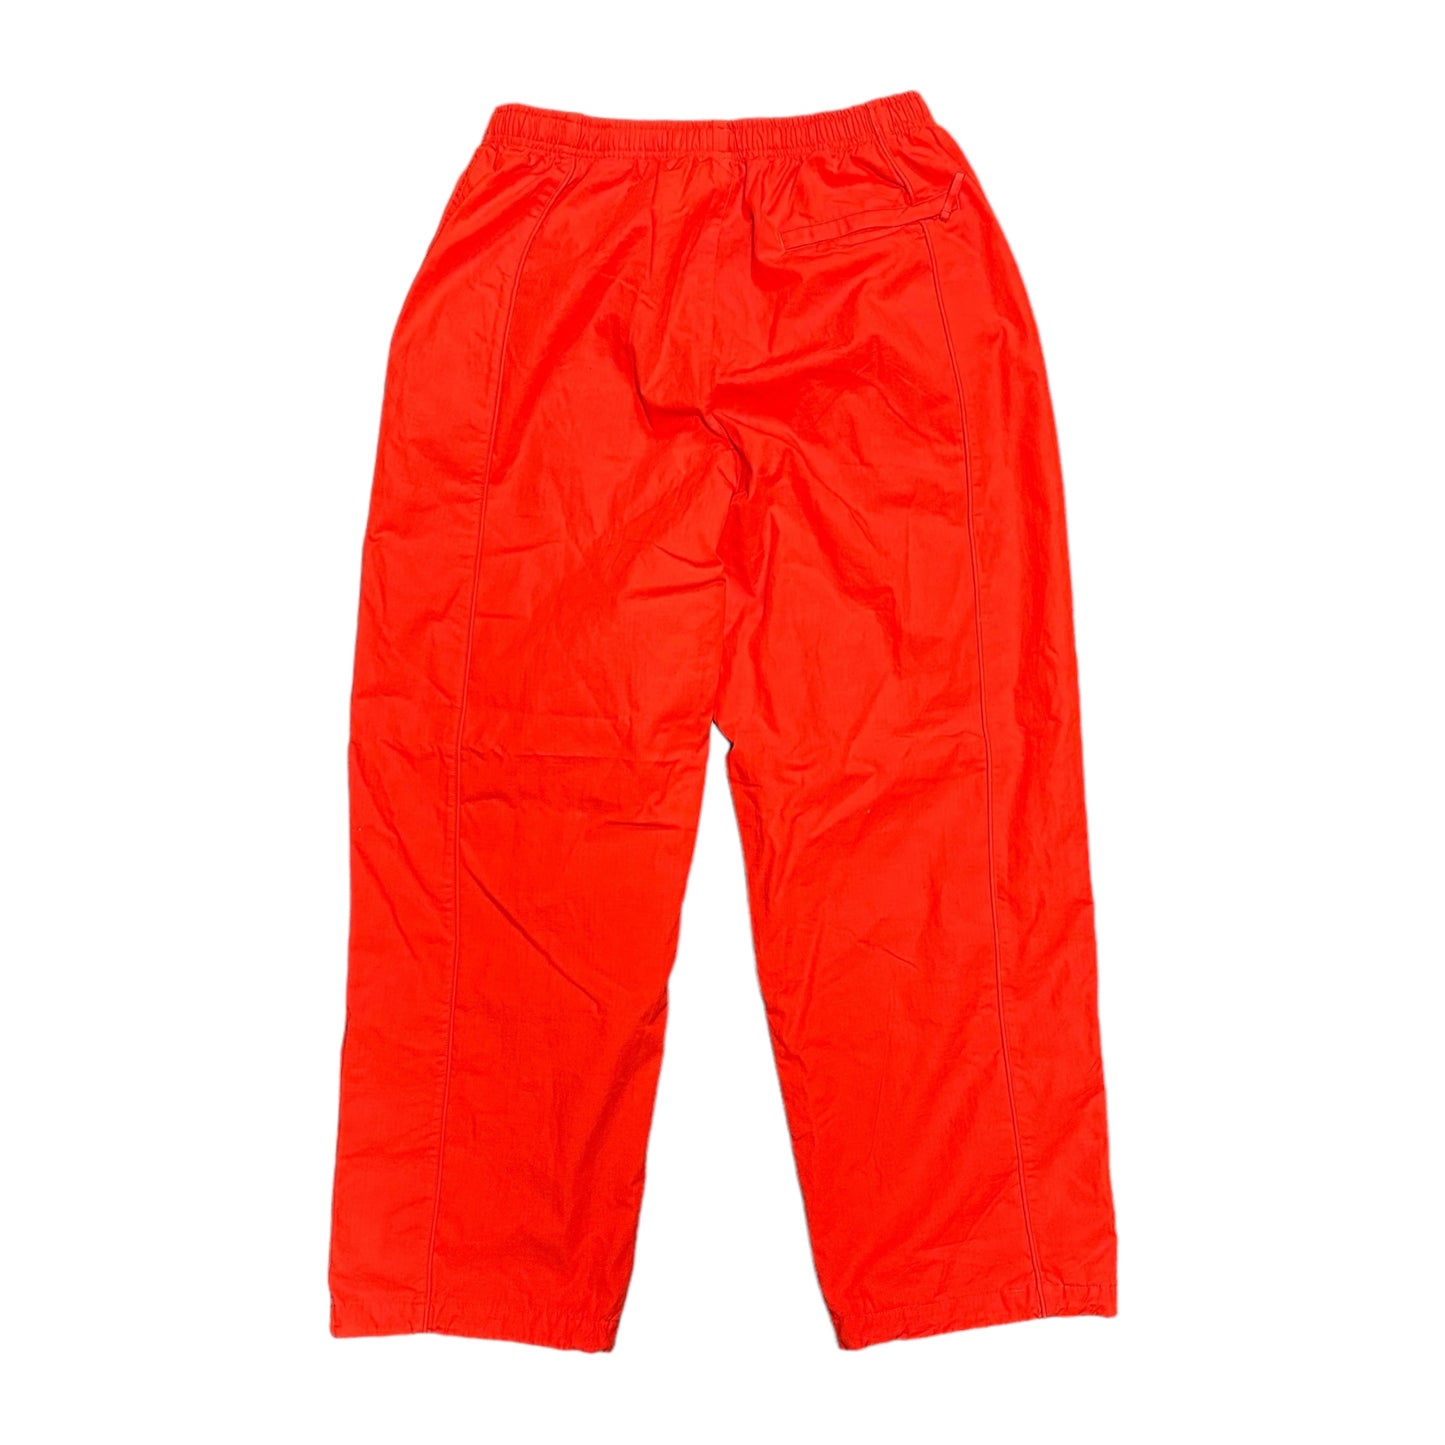 Supreme Umbro Red Track Pants